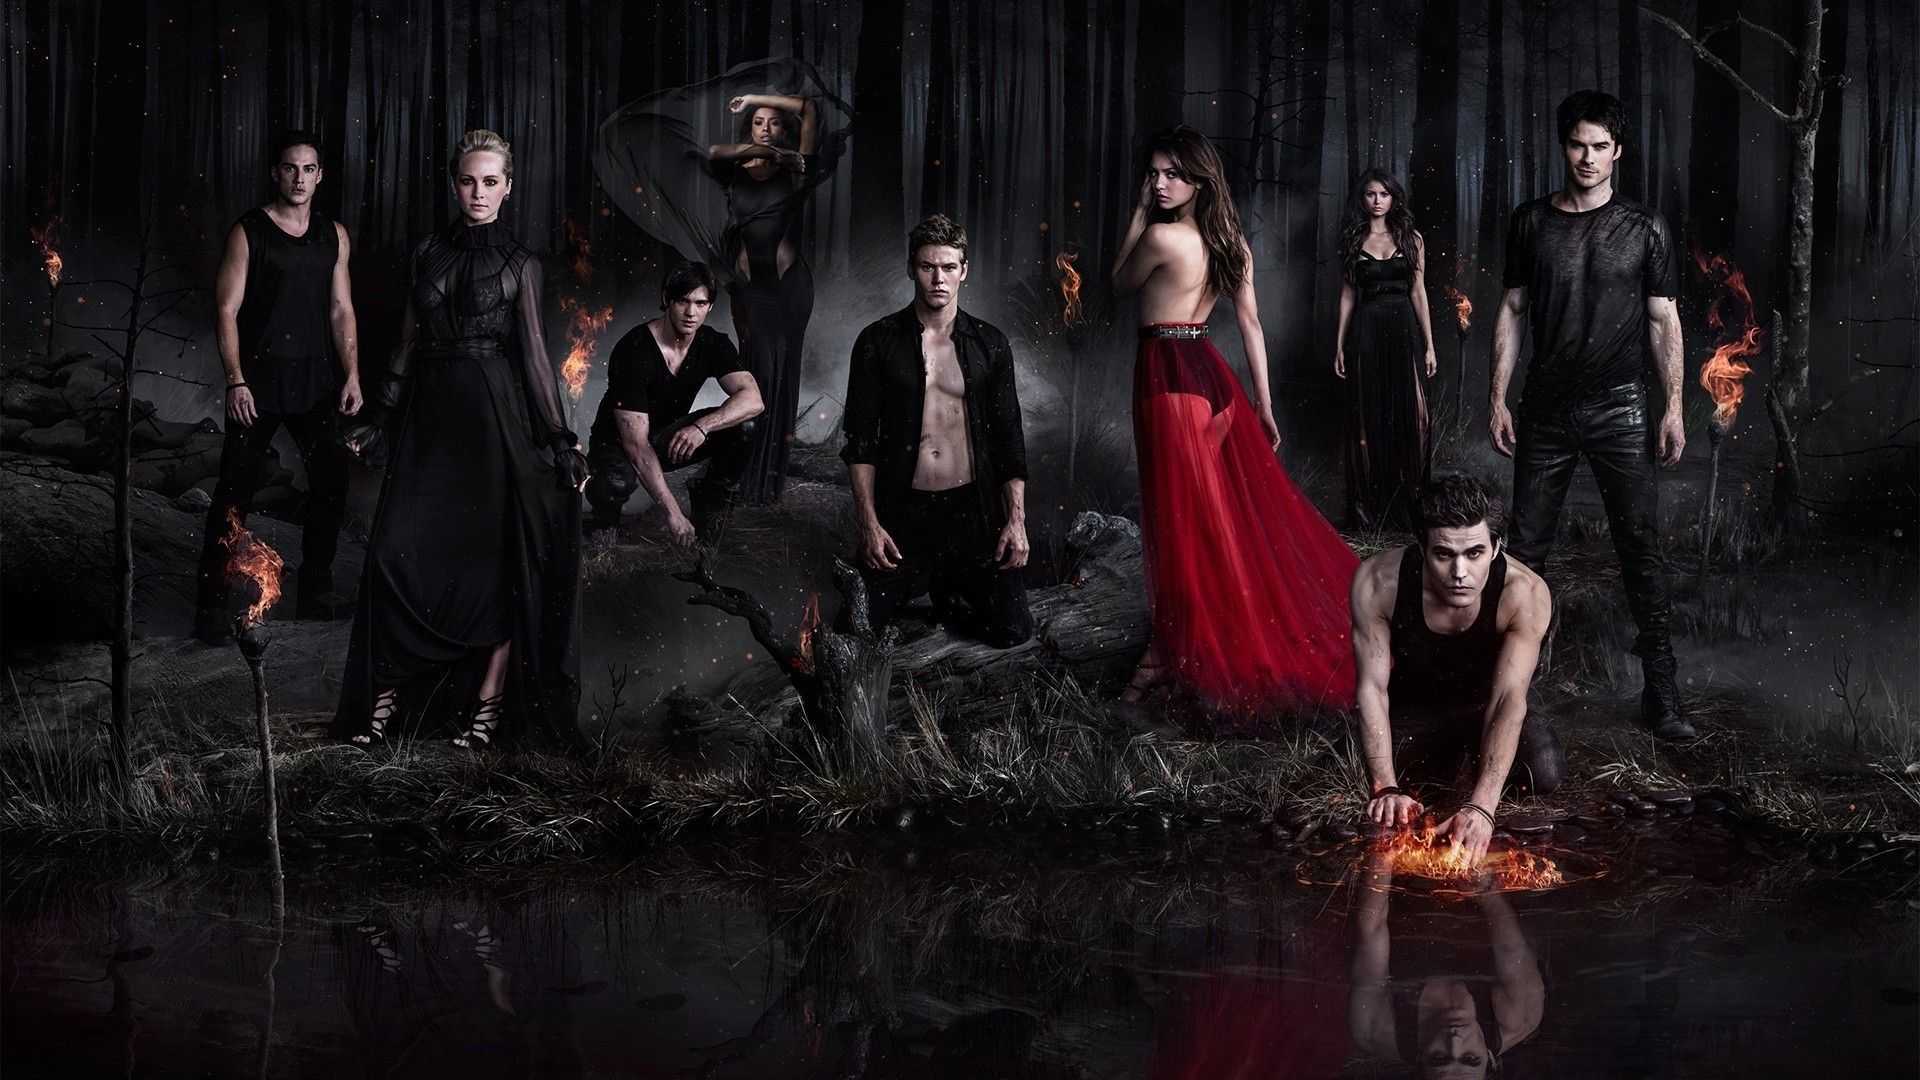 Vampire Diaries Wallpaper: 24 Image, Movie & TV Category